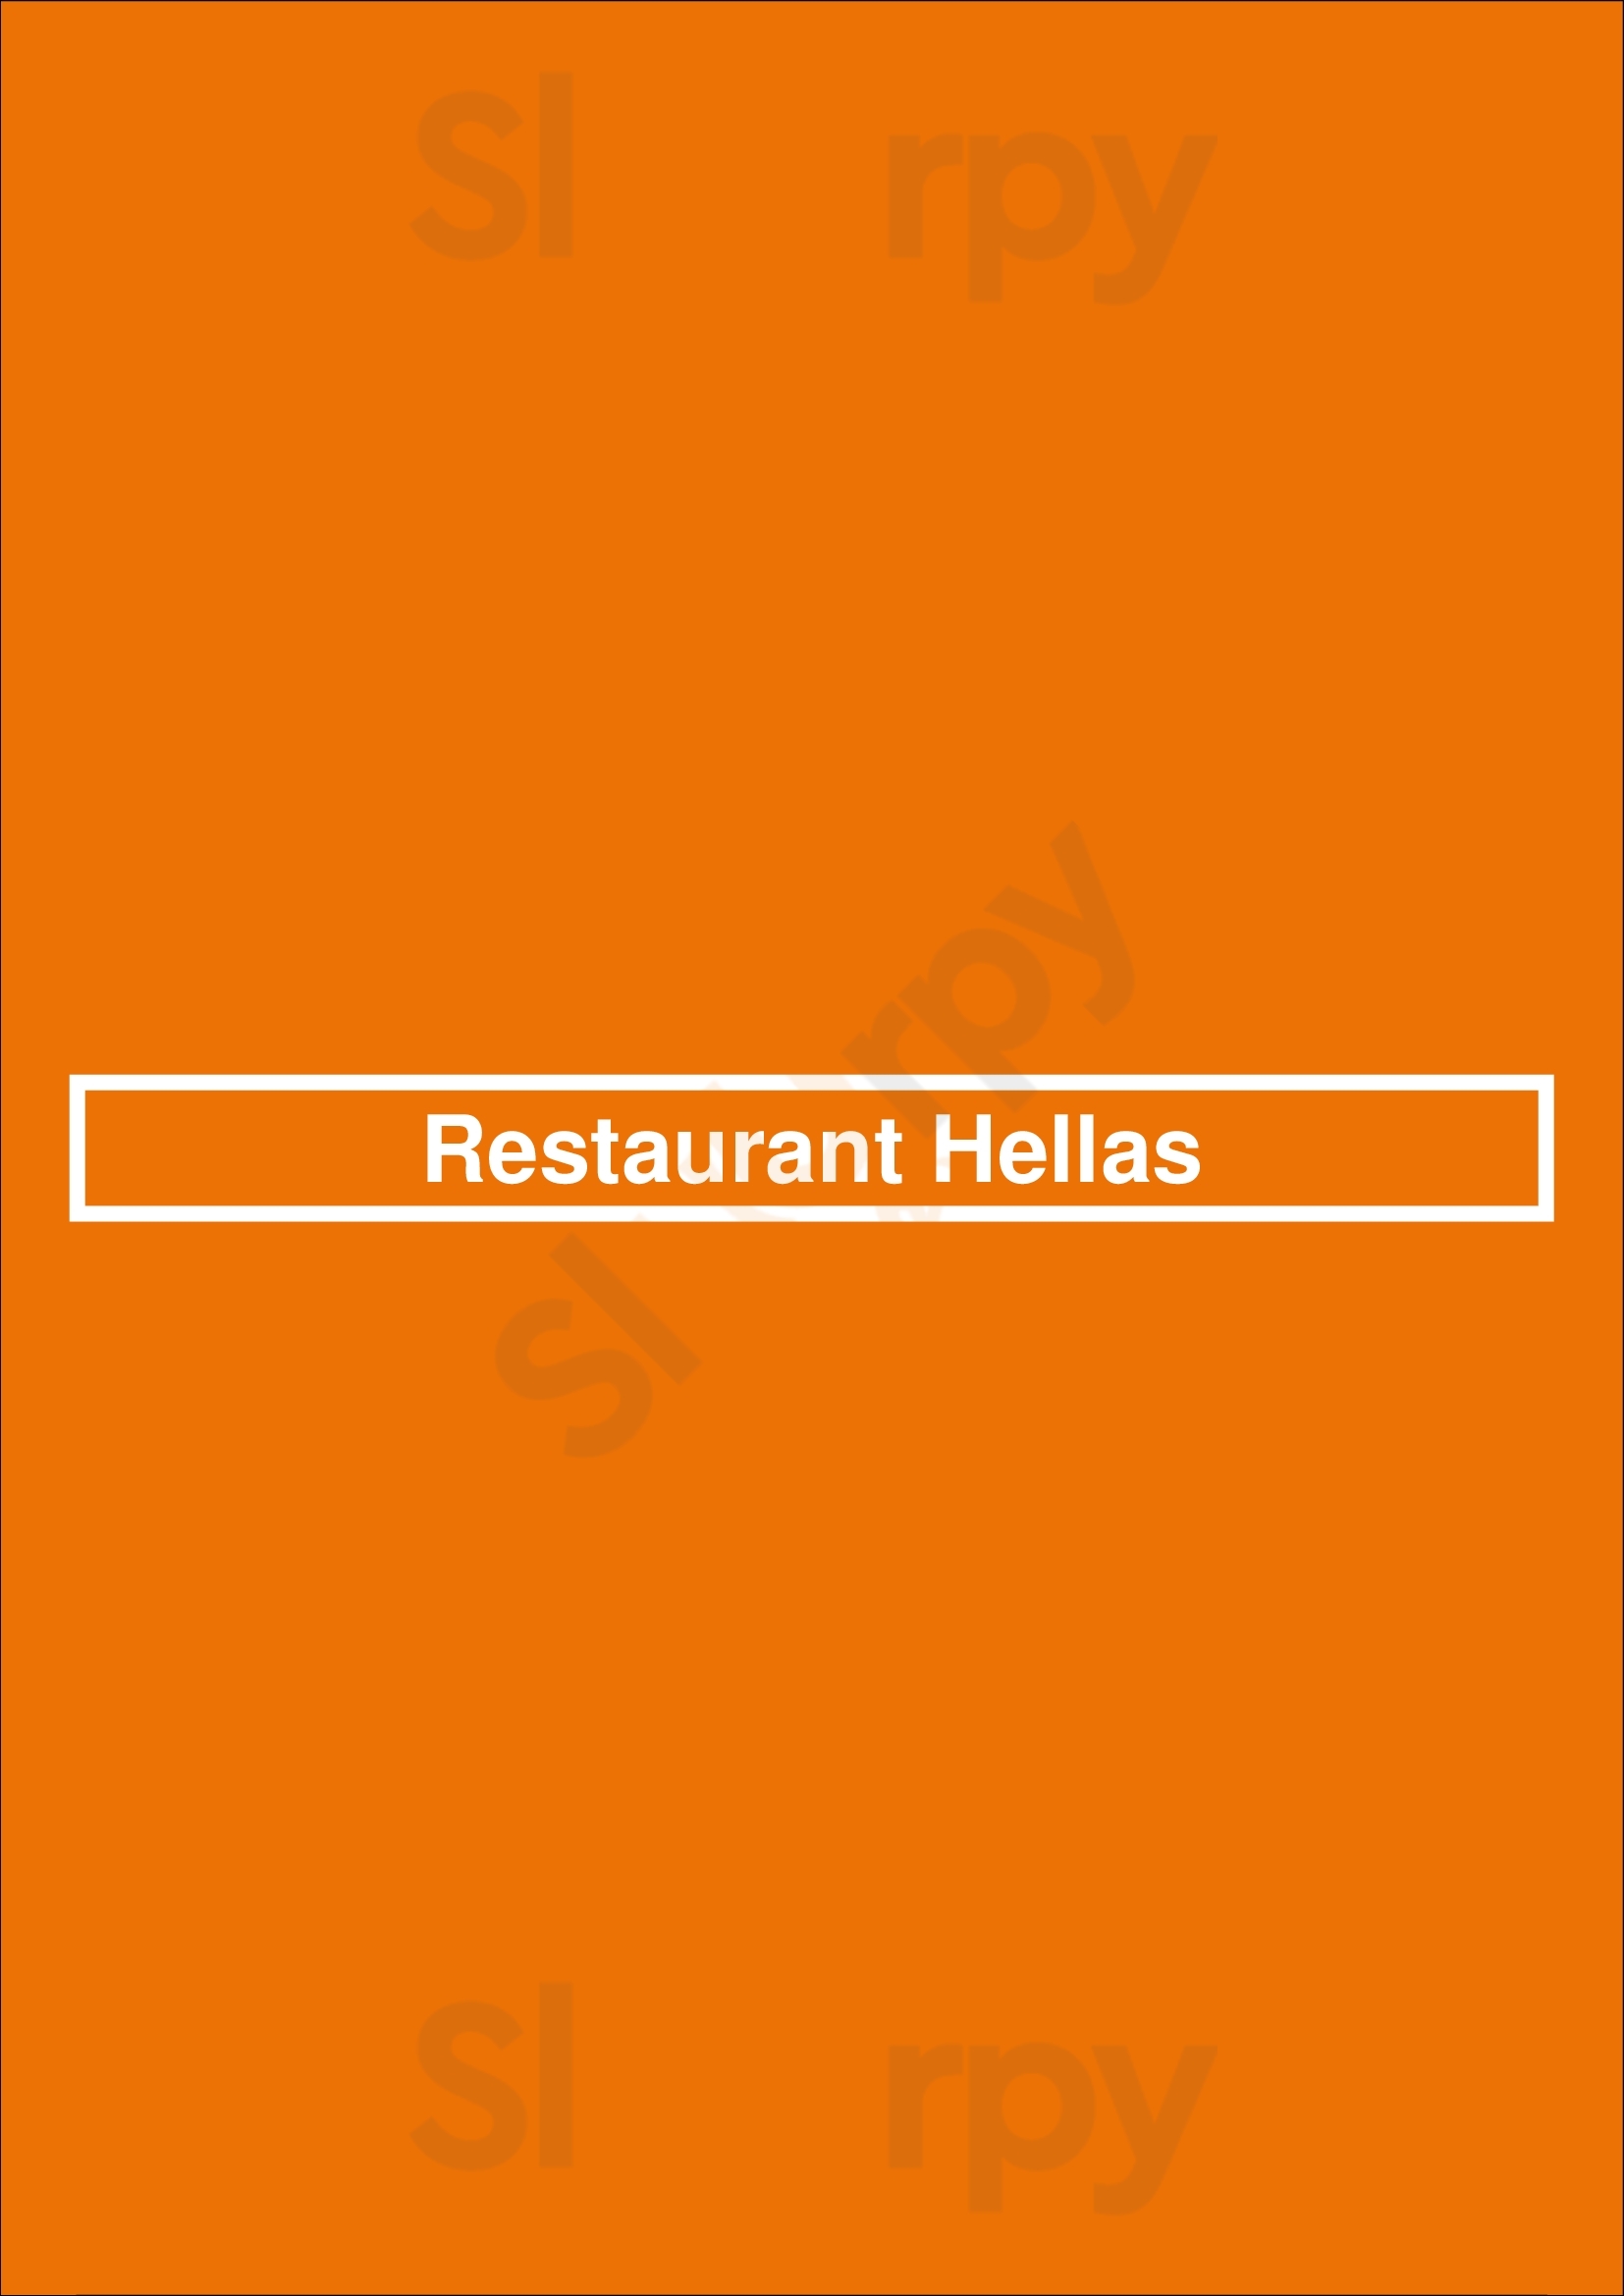 Restaurant Hellas Hamburg Menu - 1